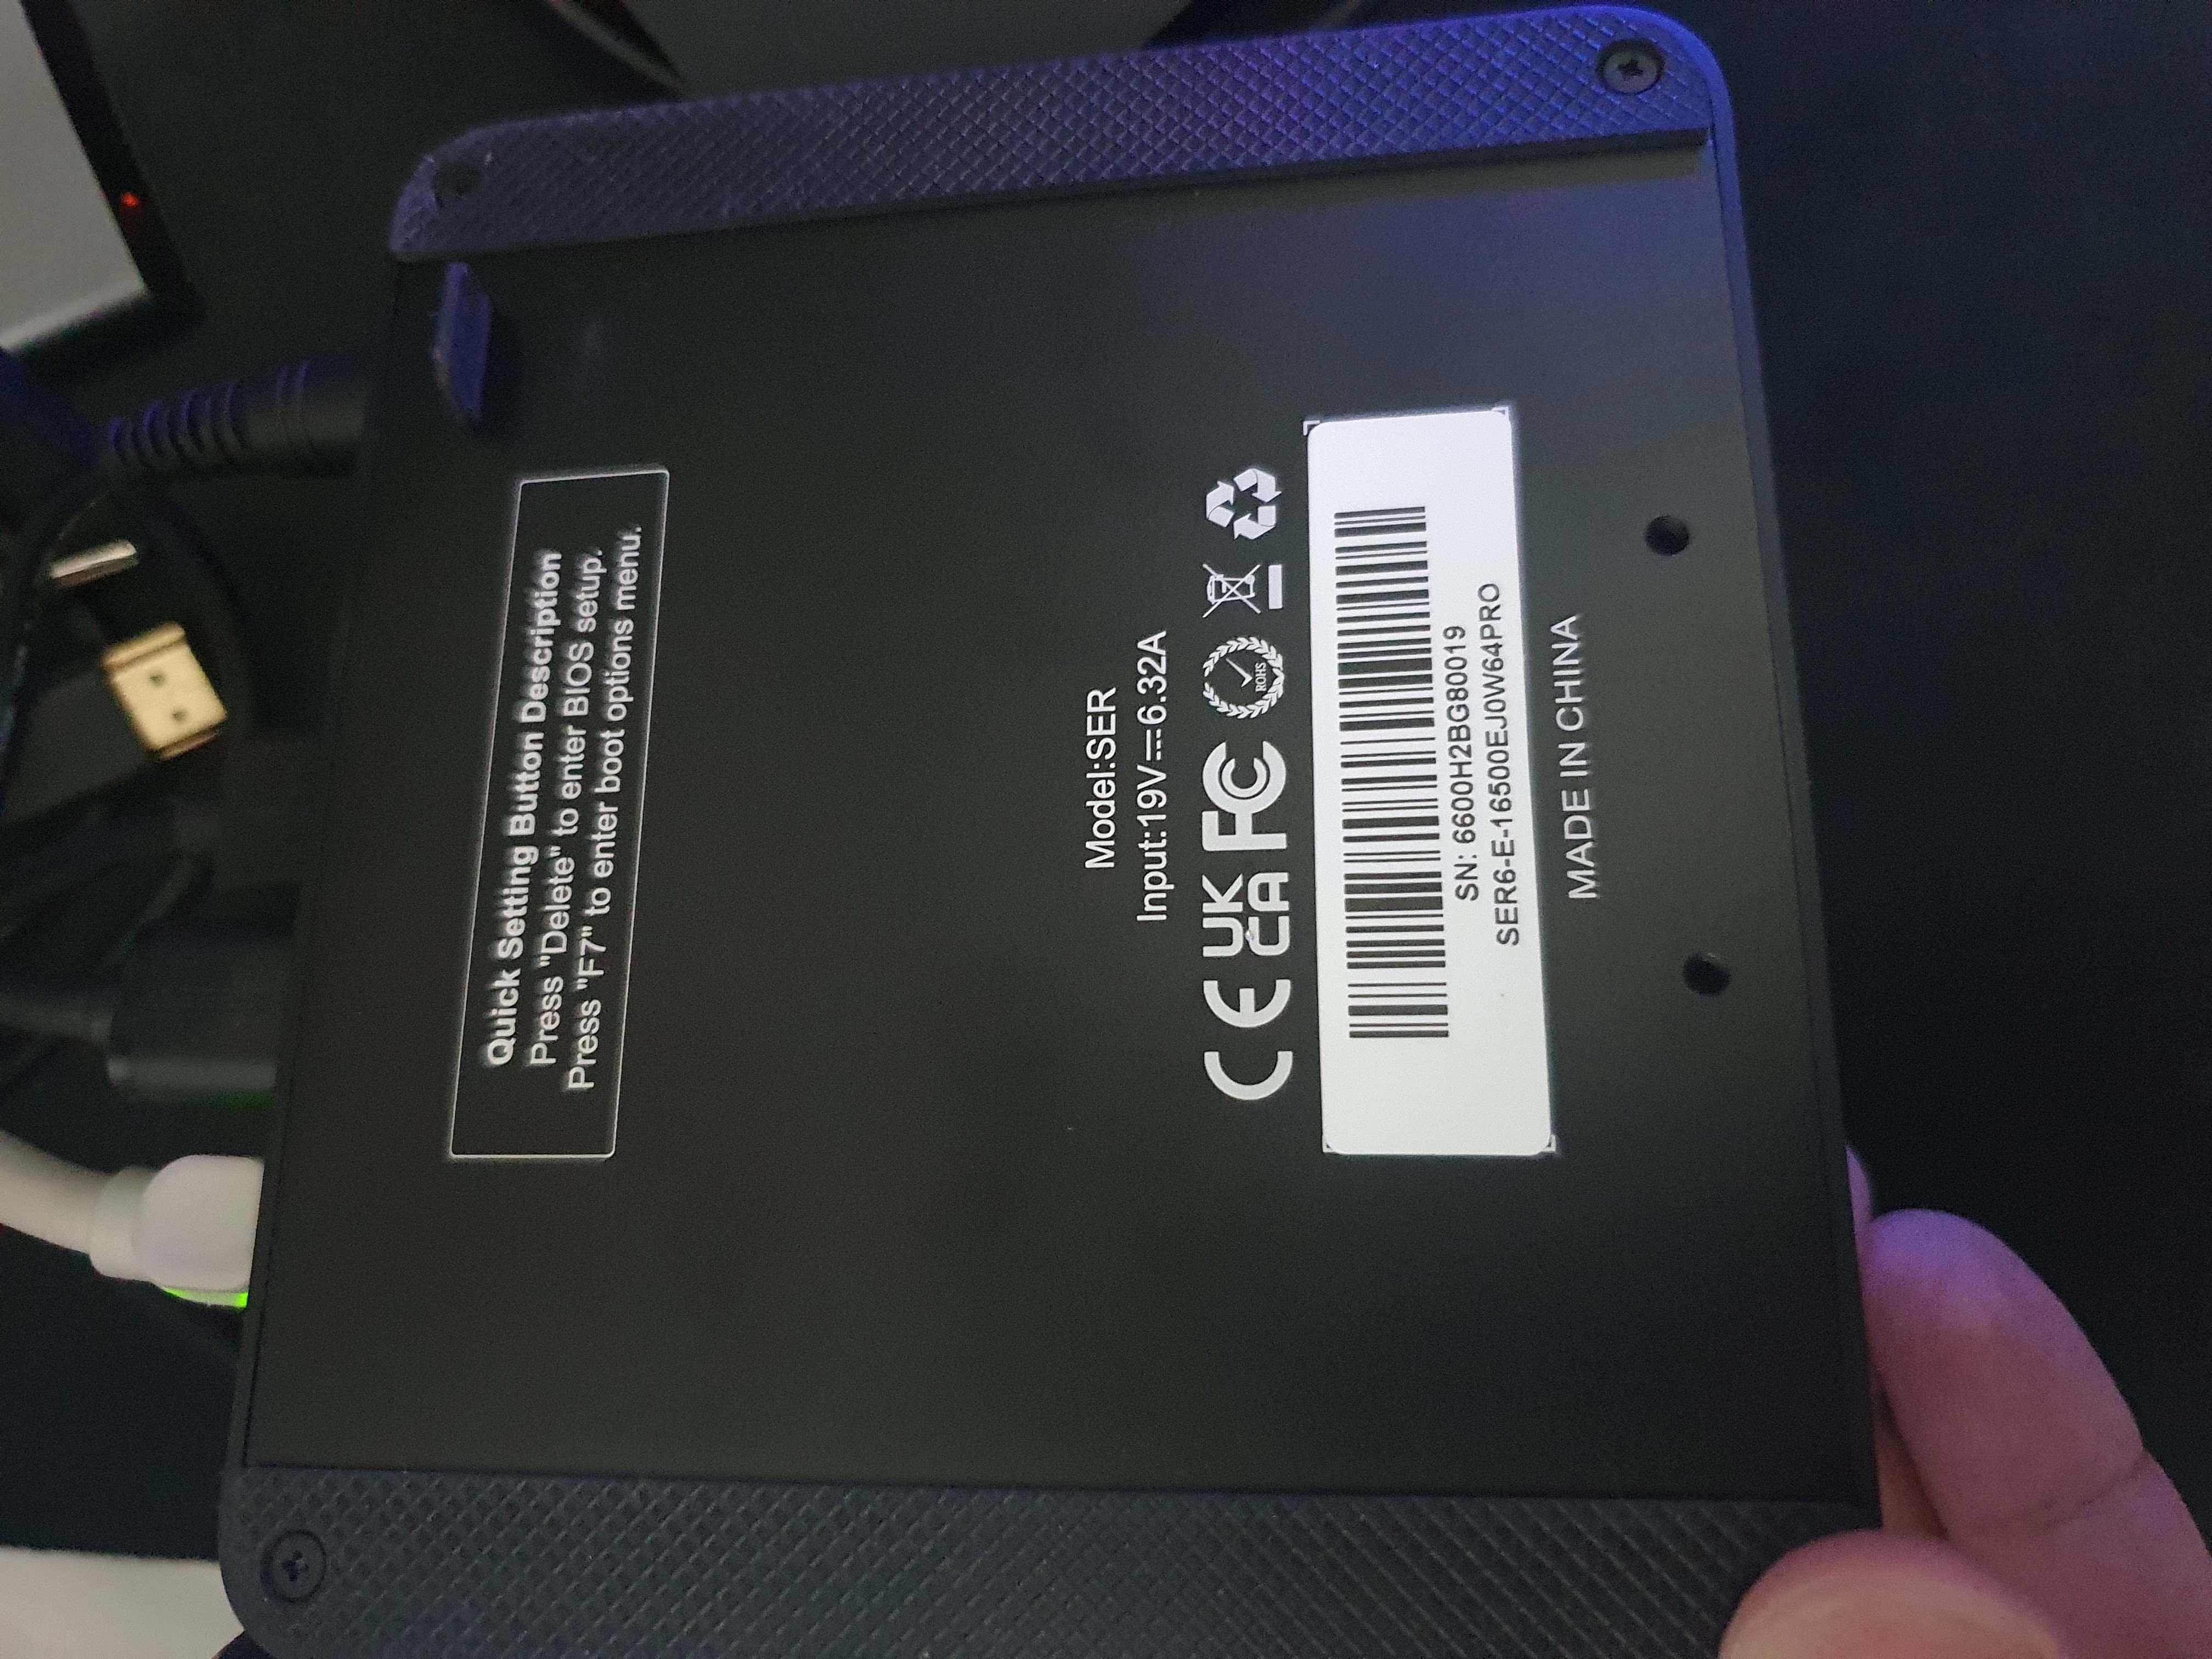 SER6 - 6600h - USB4/Thunderbolt not recognizes device